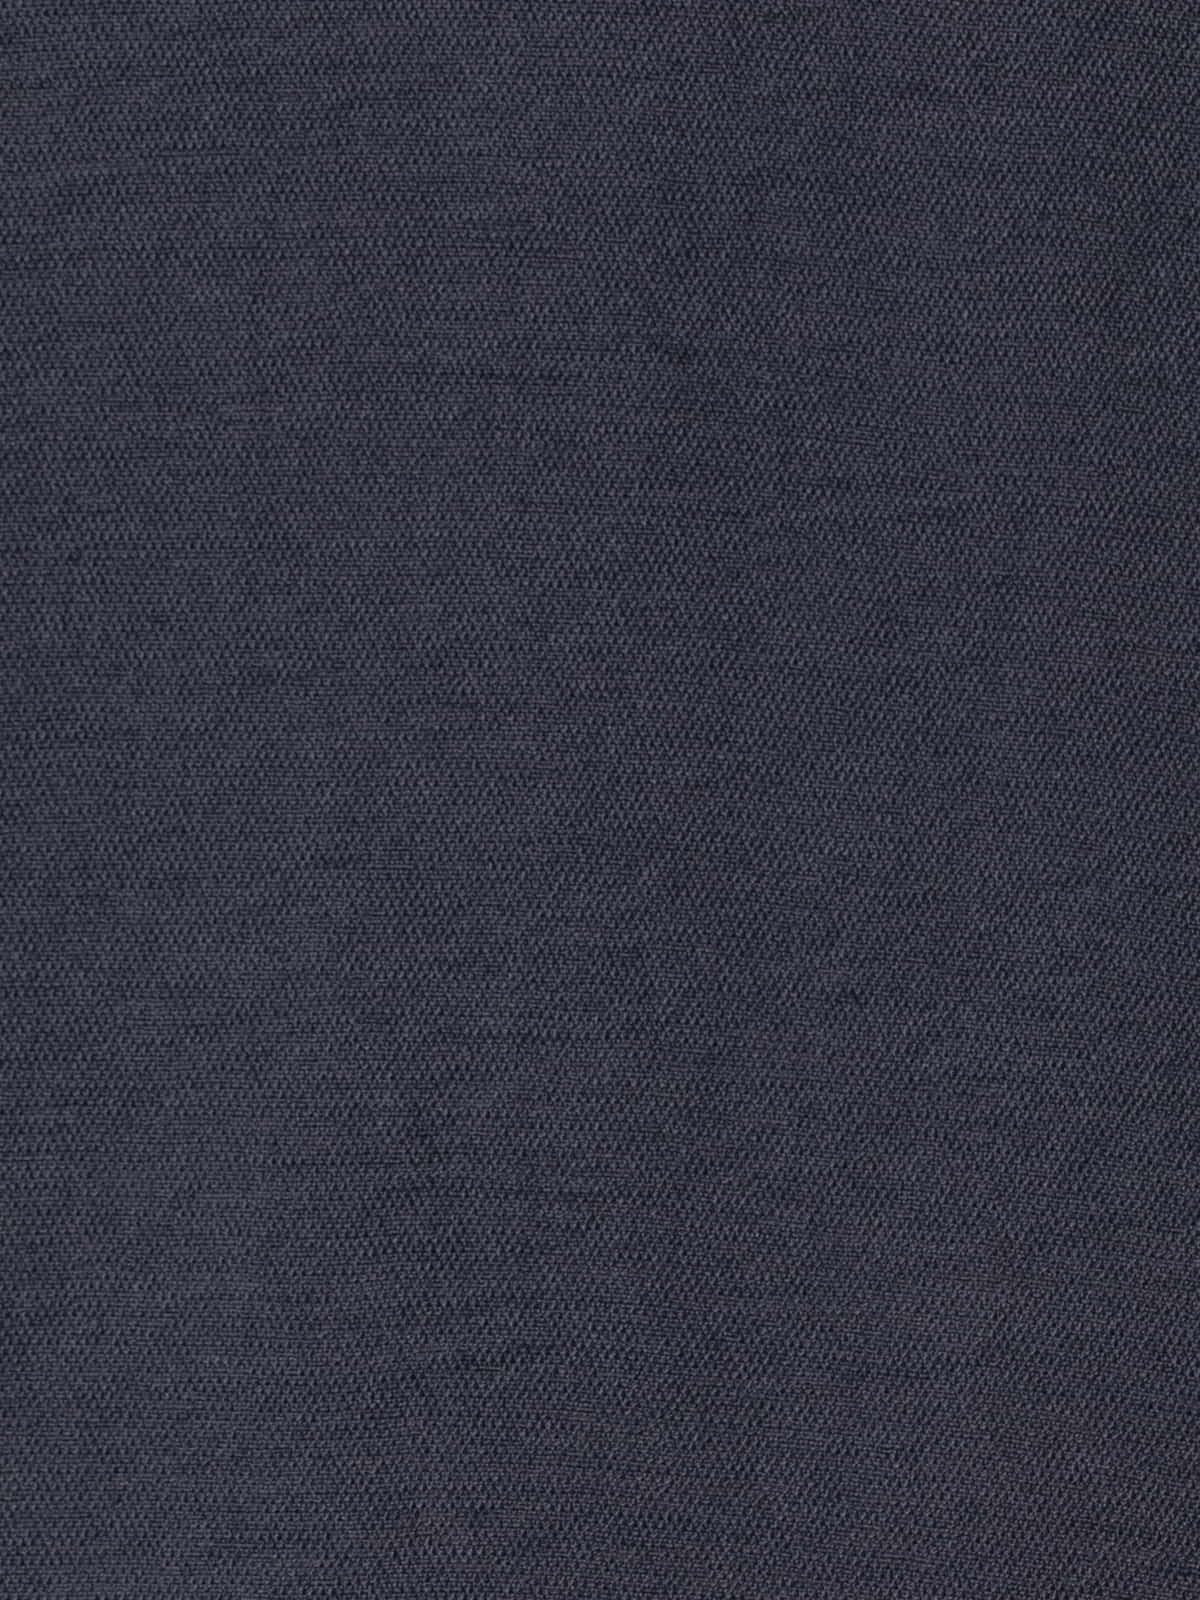 Woman Rustic fabric oversize t-shirt Blue Navy